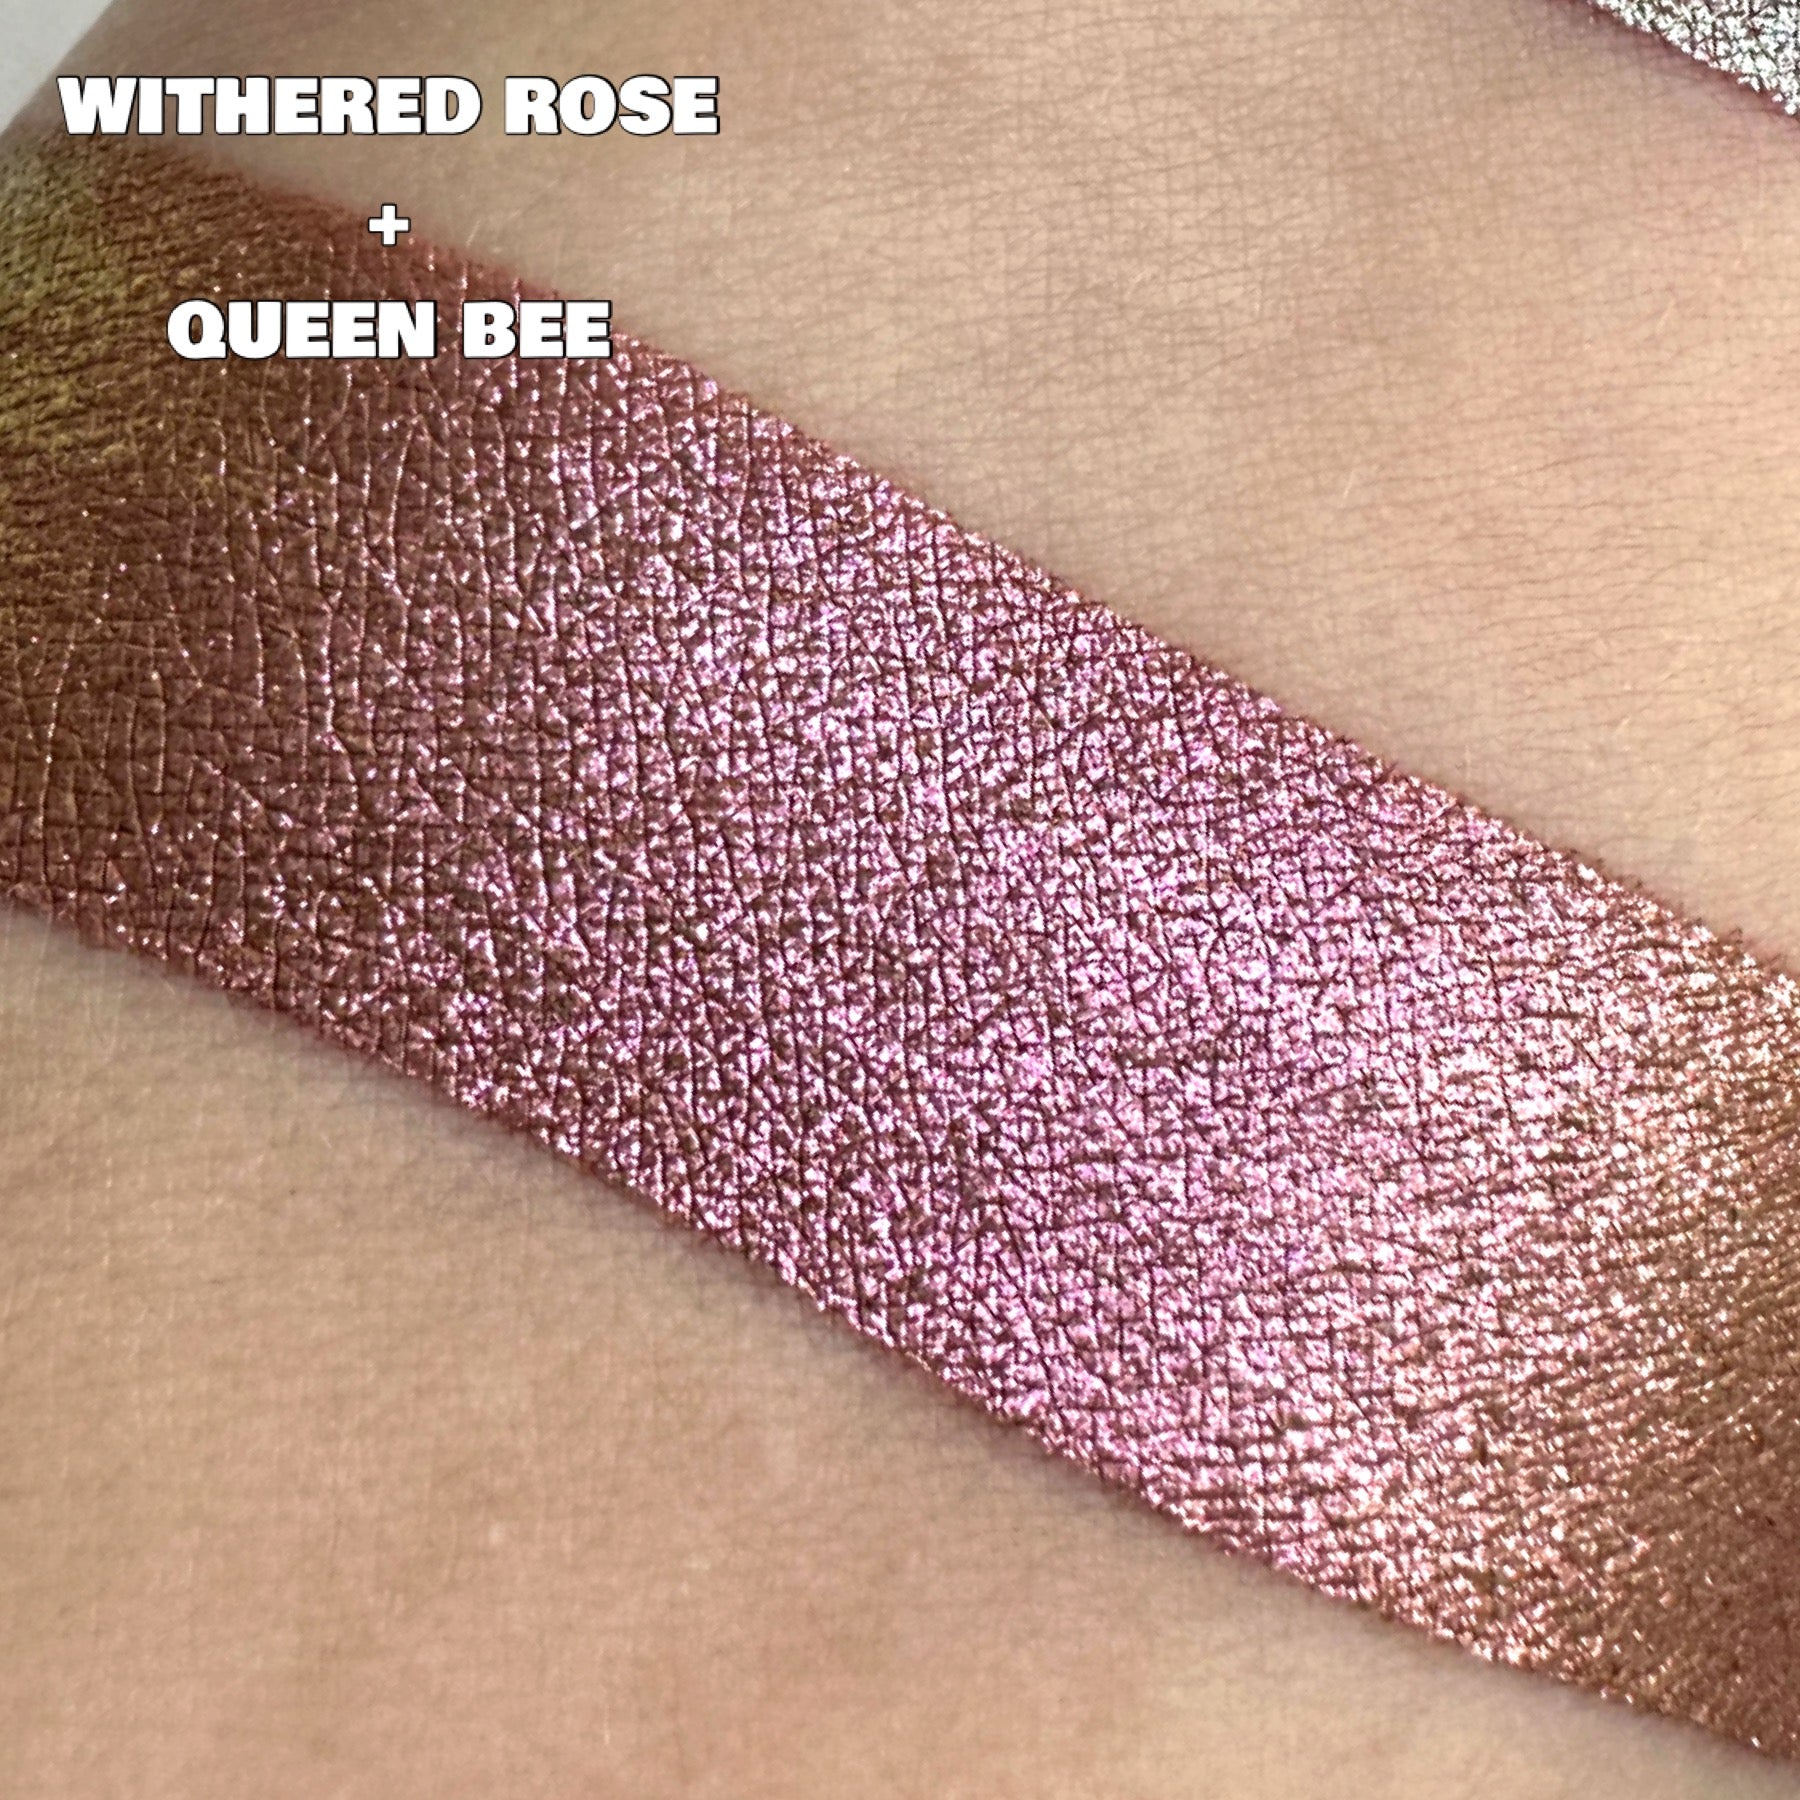 Withered Rose Velvet Matte Liquid Lipstick